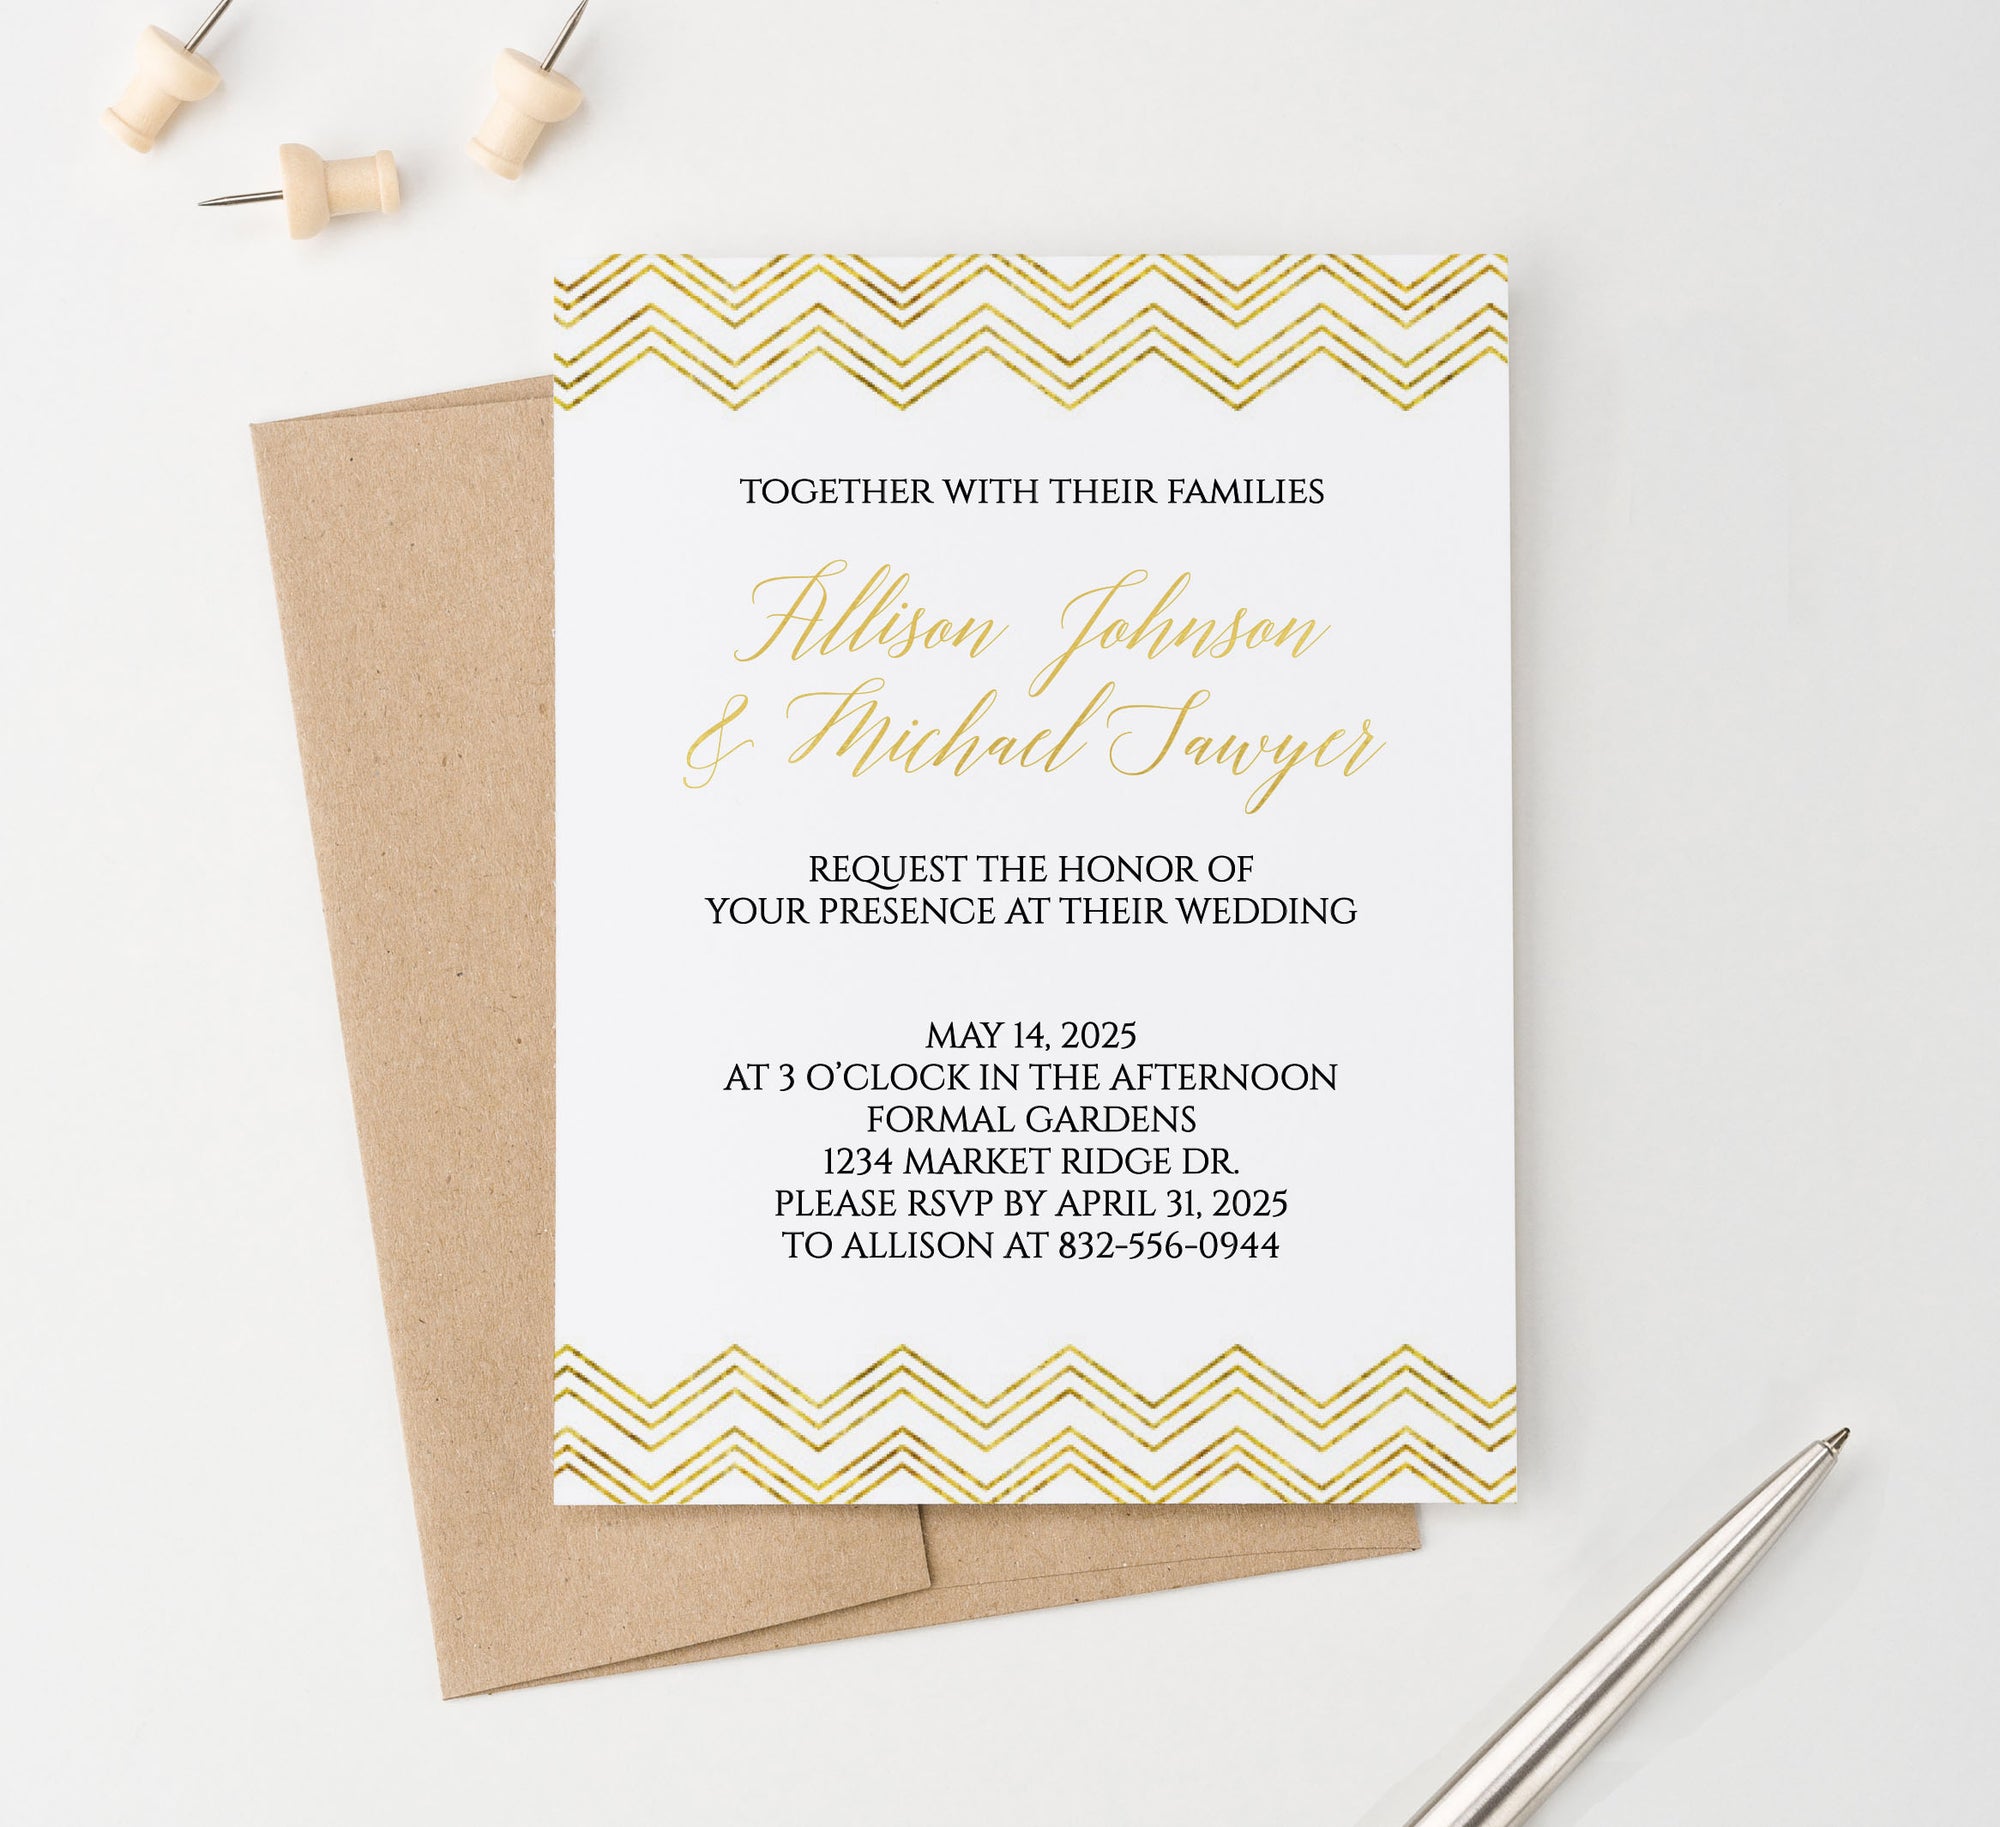 WI018 Gold Chevron Wedding Invitations-Customized elegant classic invites marriage